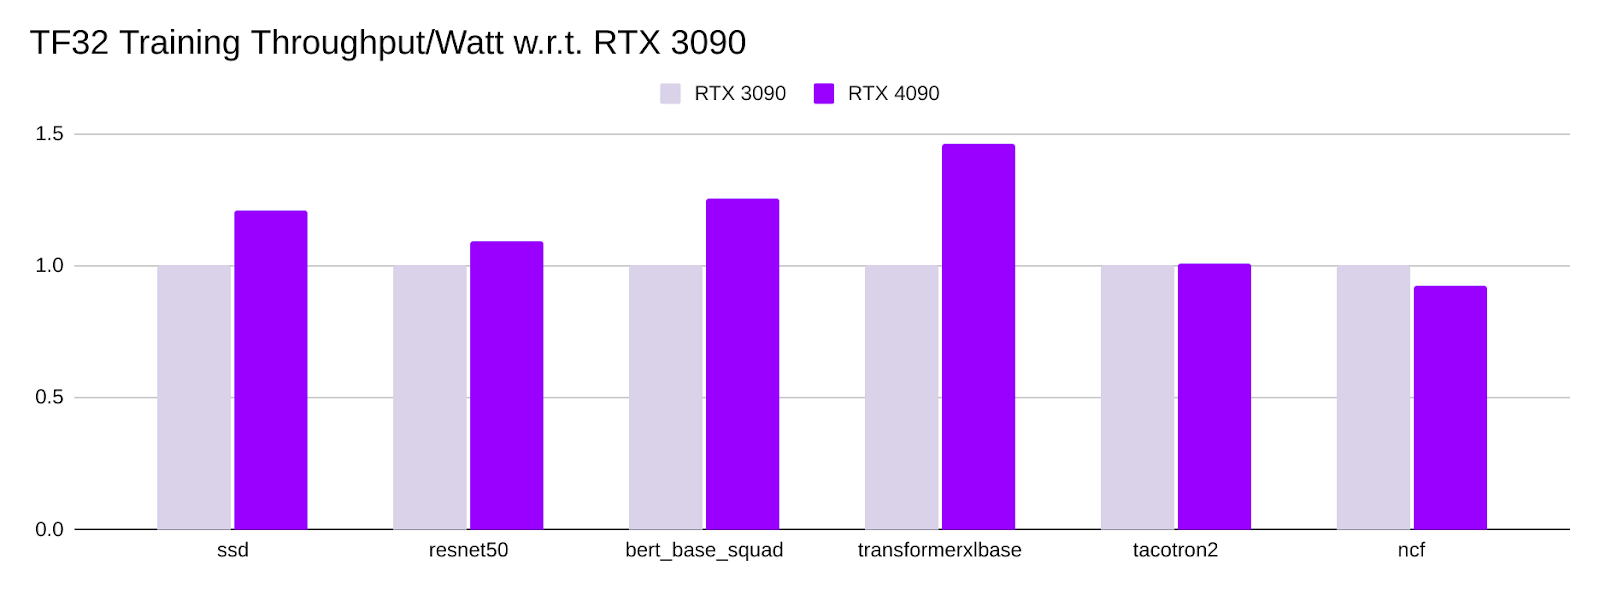 tf32-training-throughput-per-watt-wrt-rtx-3090